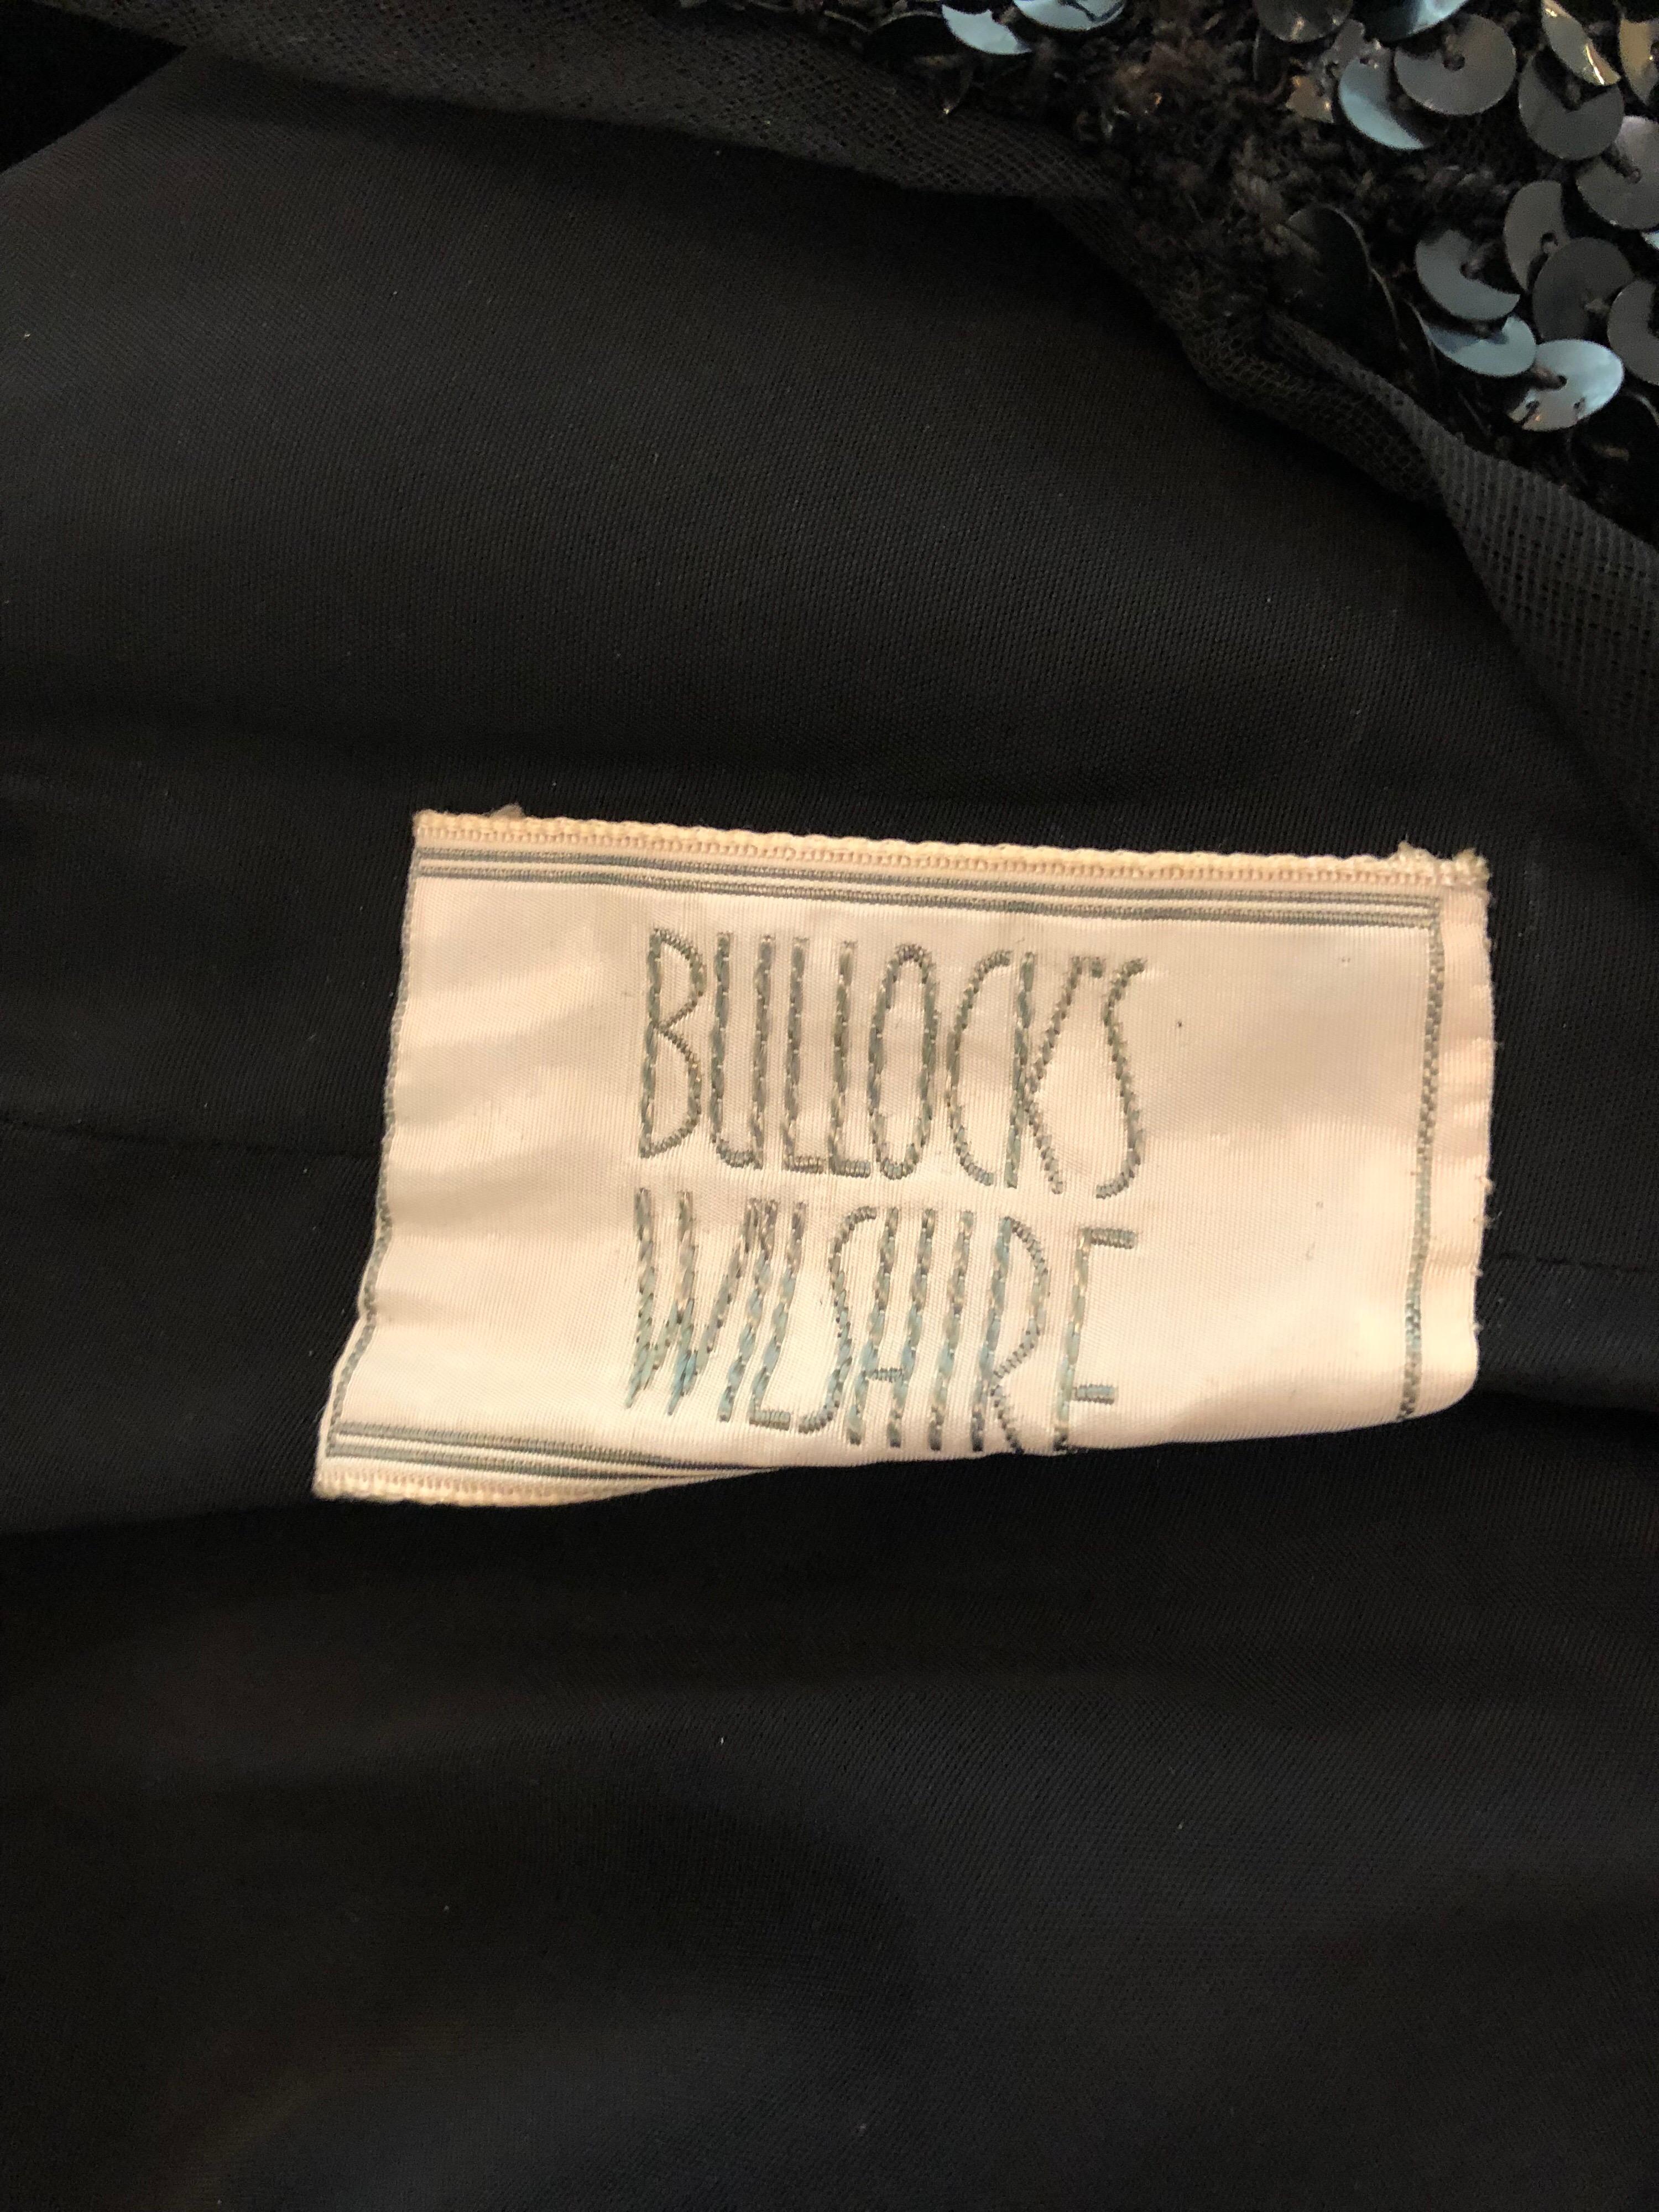 Stunning 1950s Bullock's Wilshire Large Size Black Silk Sequined 50s Midi Dress For Sale 11